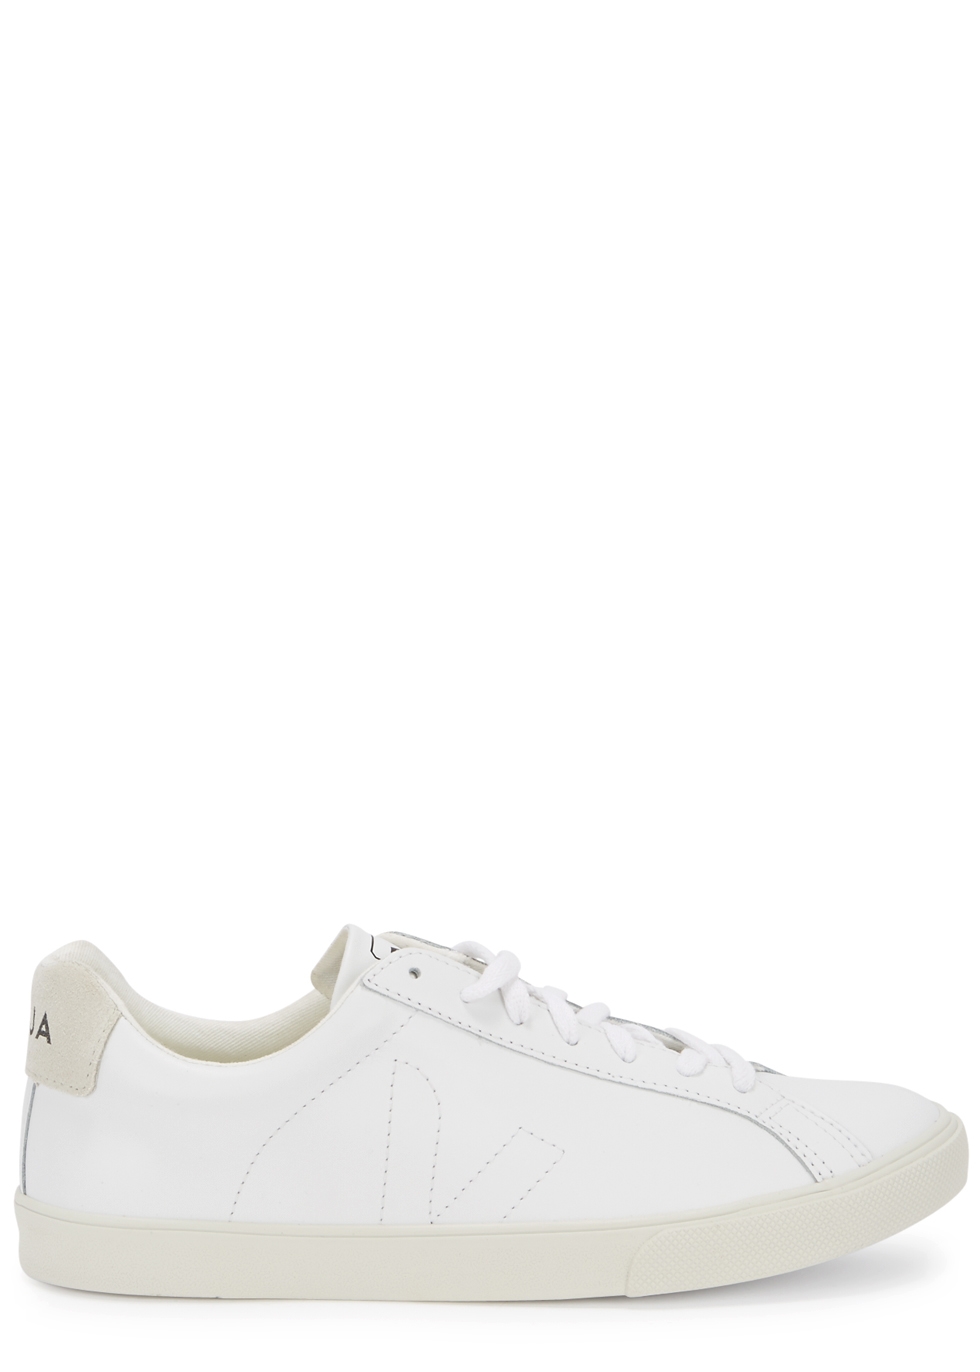 Esplar white leather sneakers